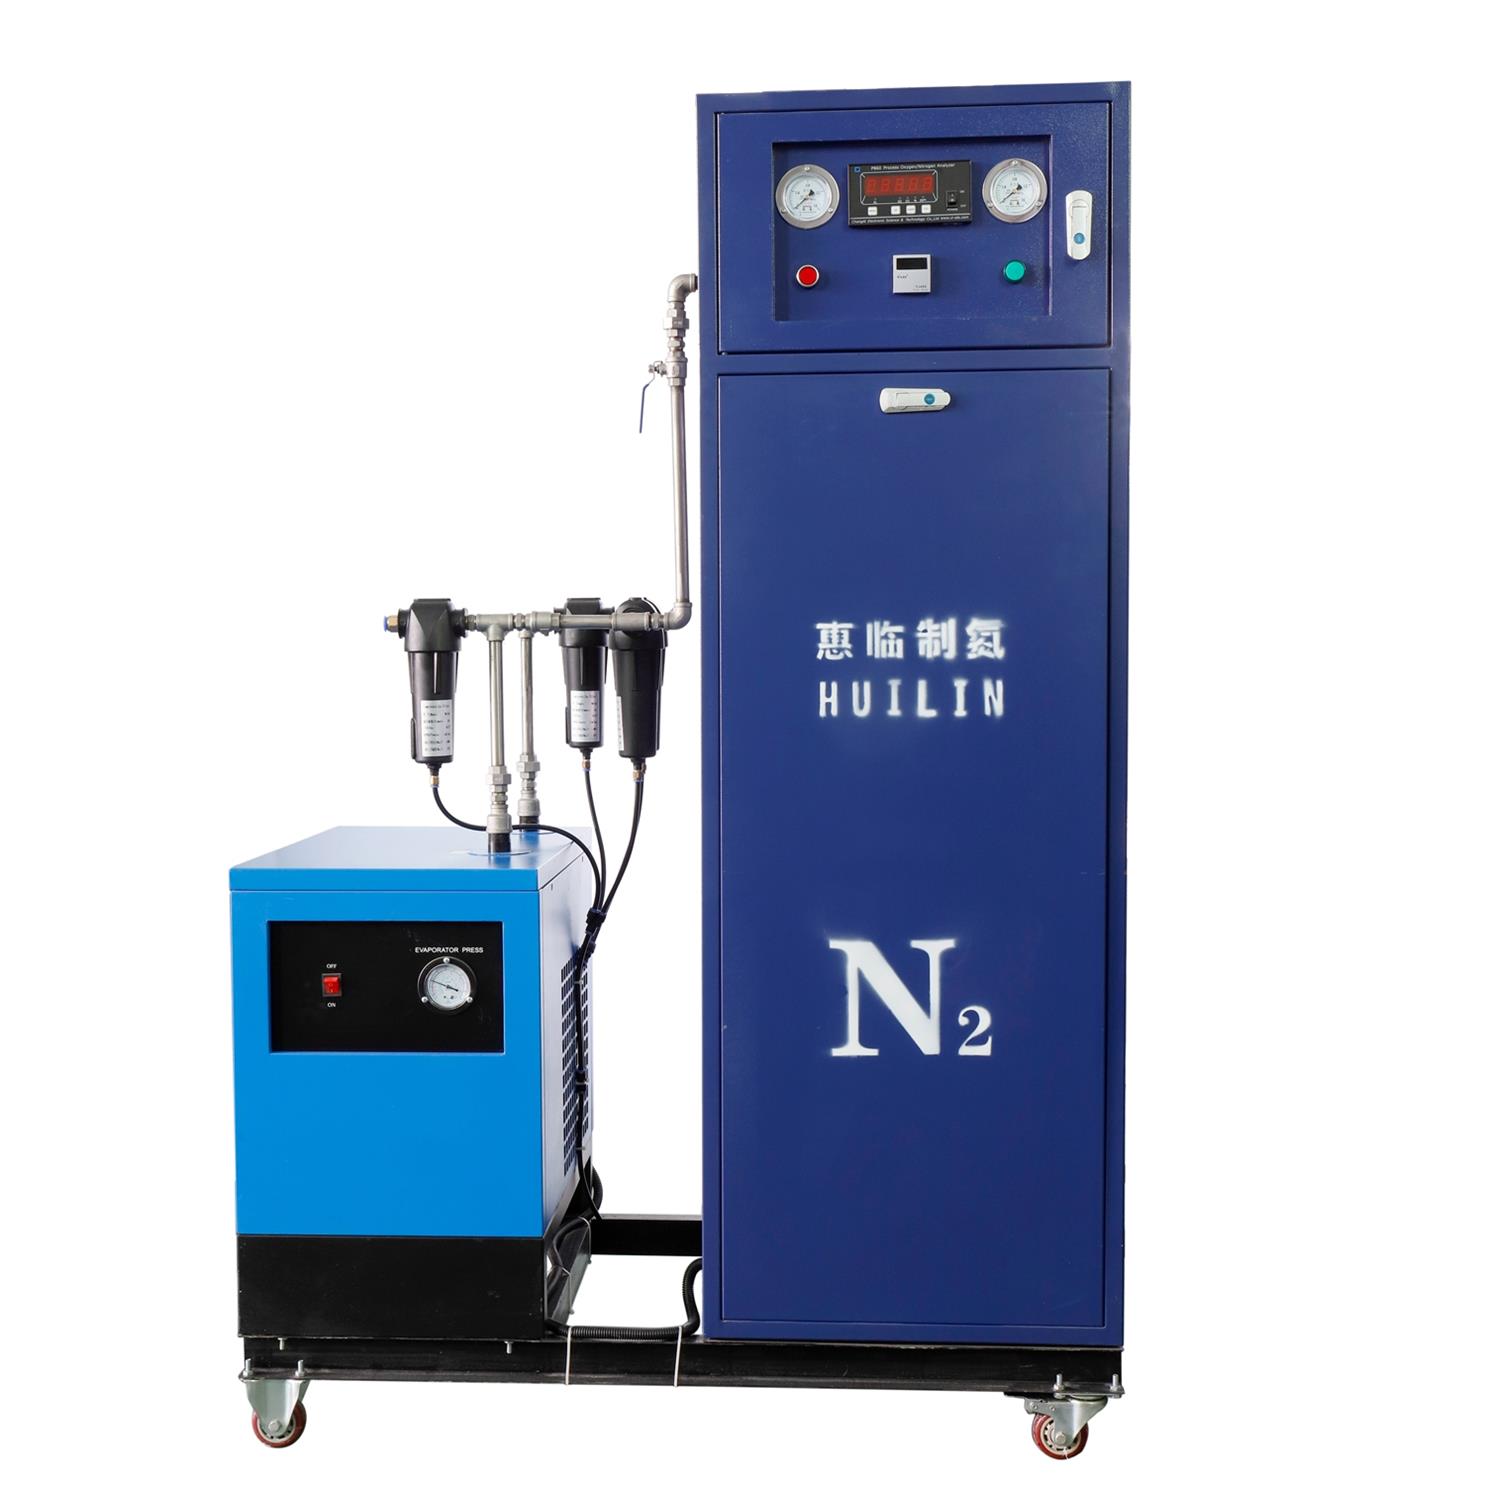 Guangzhou Huilin nitrogen generator use safety regulations